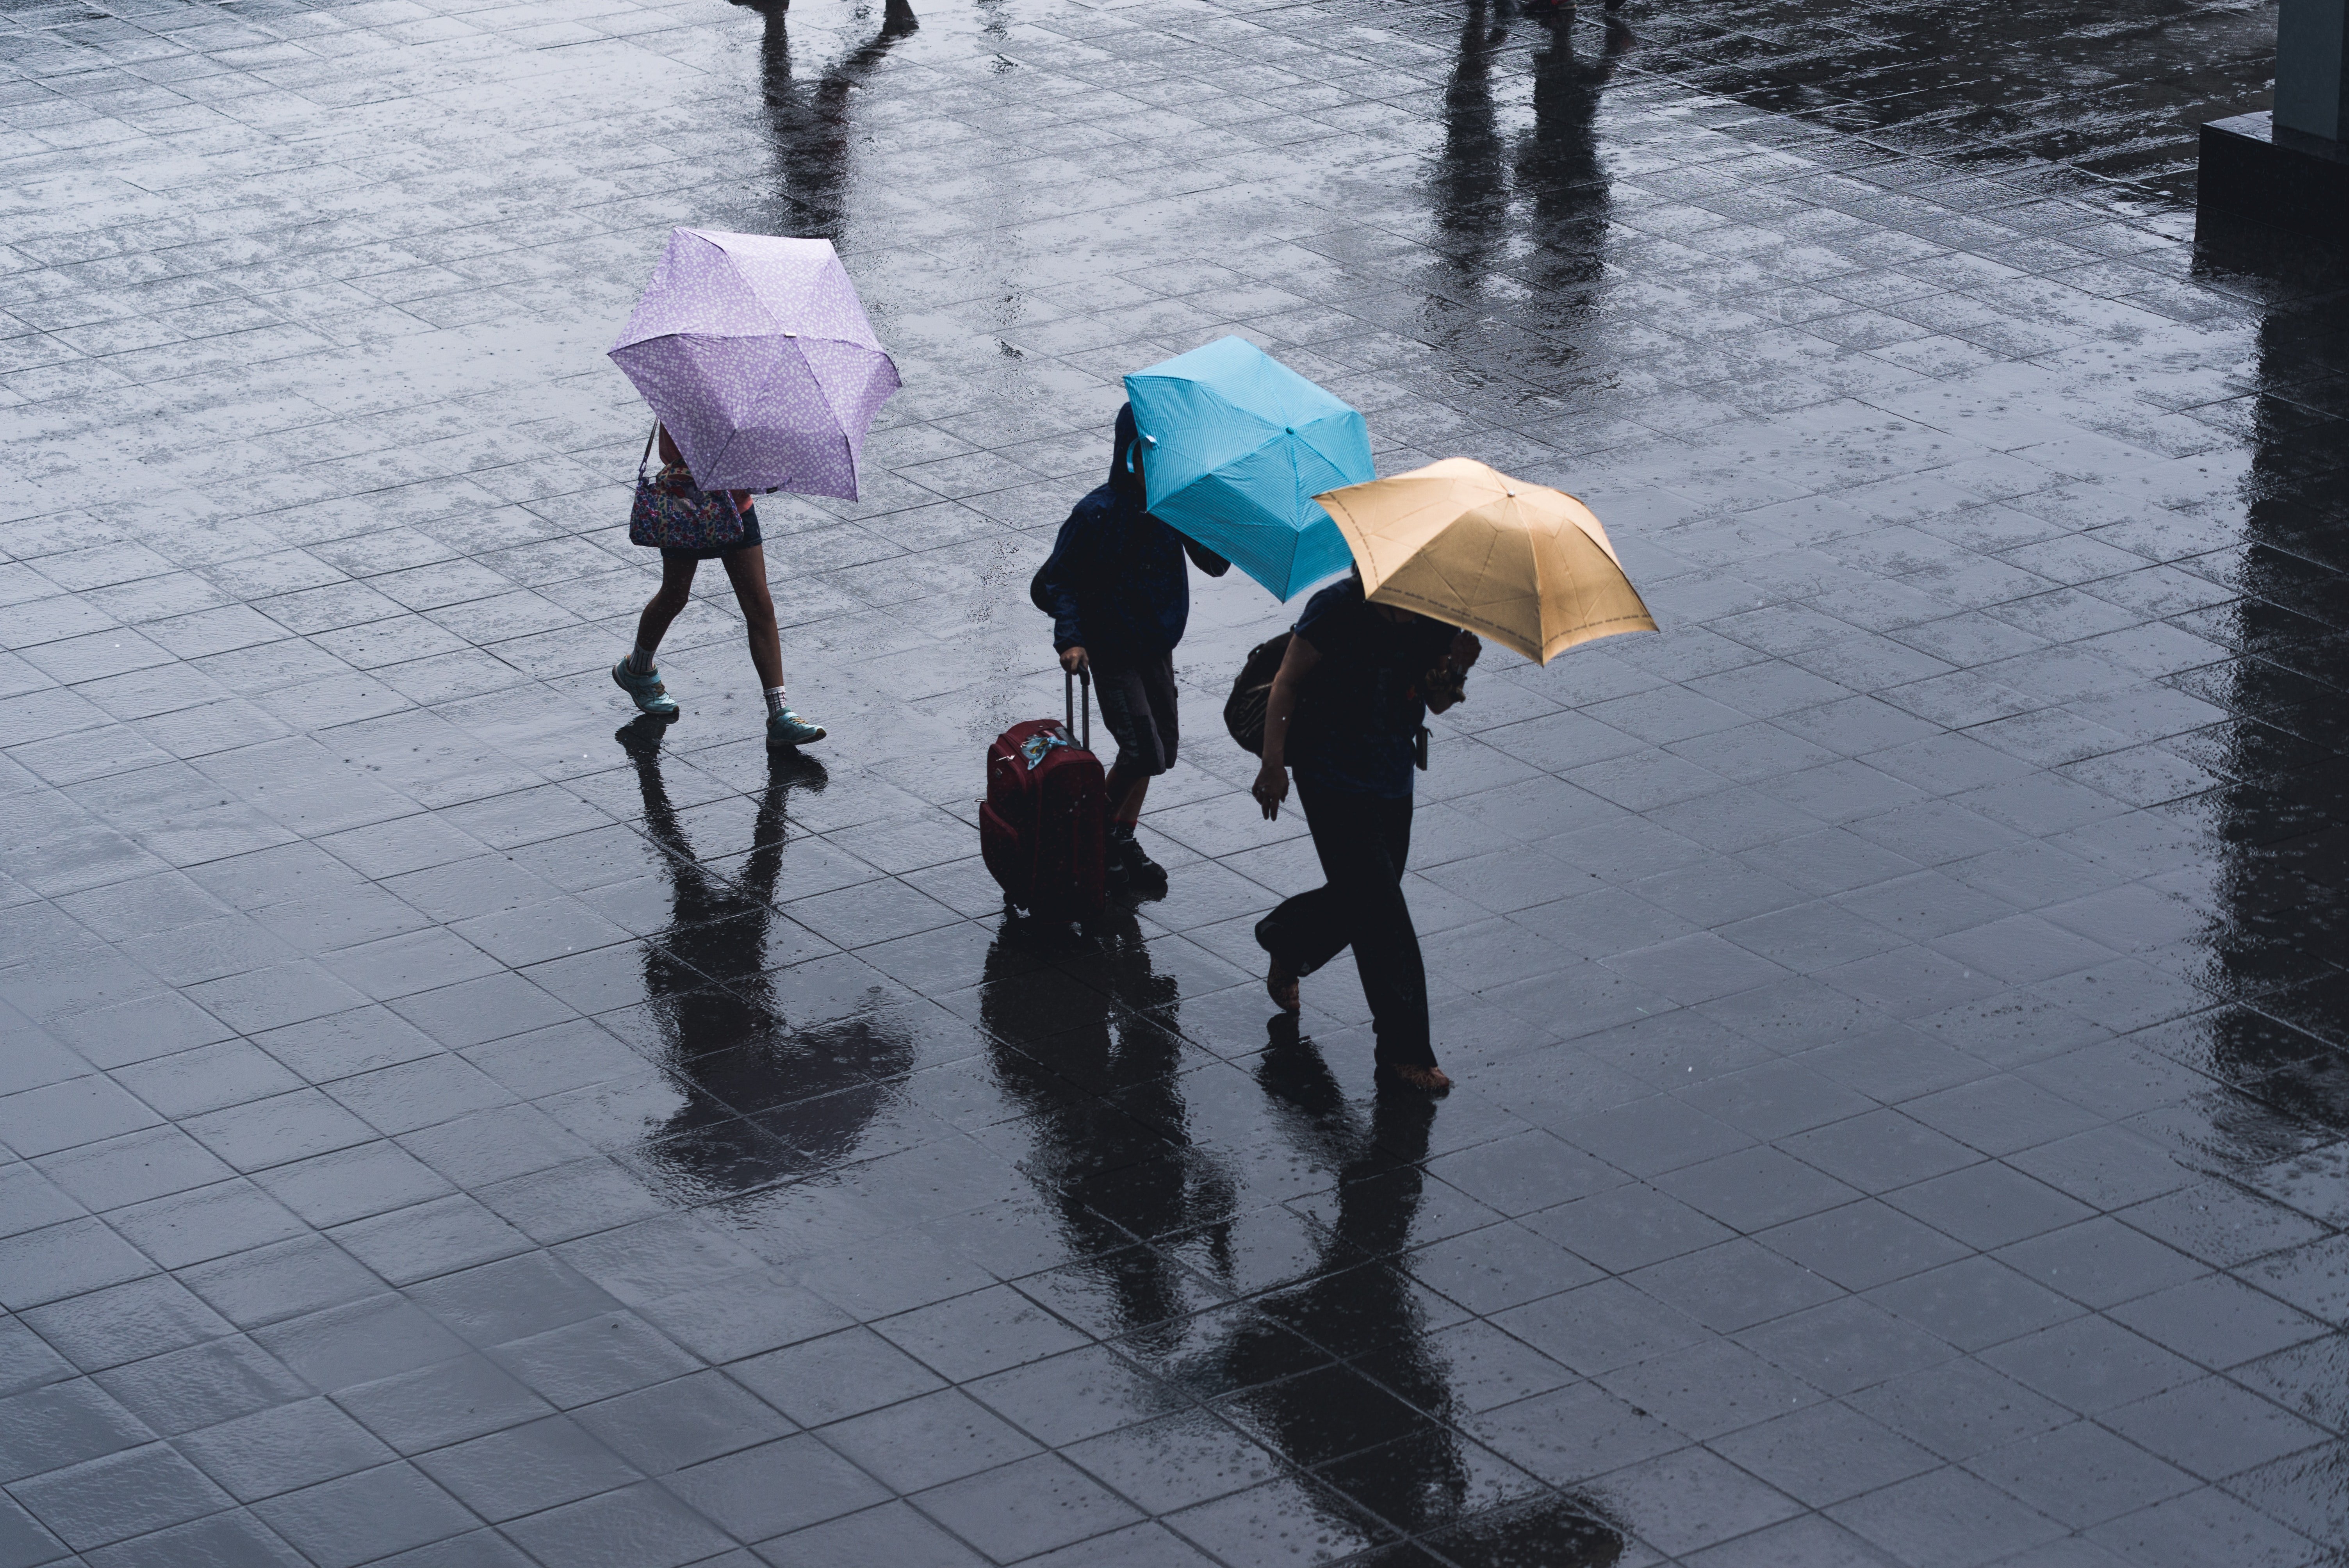 People walking in the rain | Source: Unsplash